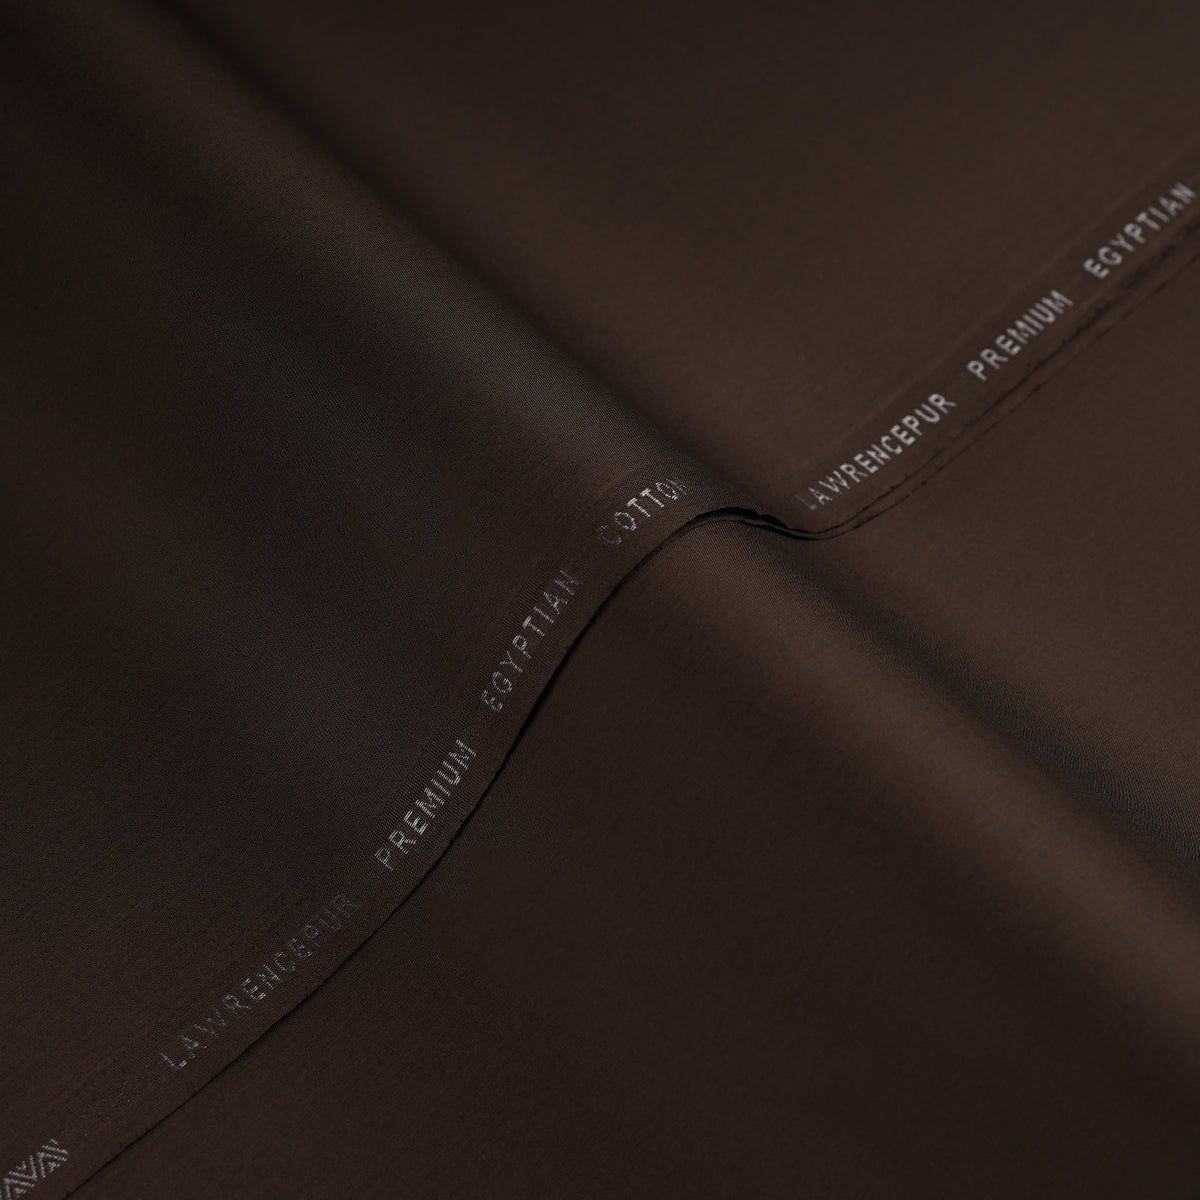 Plain-Chocolate Brown, Premium Egyptian Cotton Shalwar Kameez Fabric